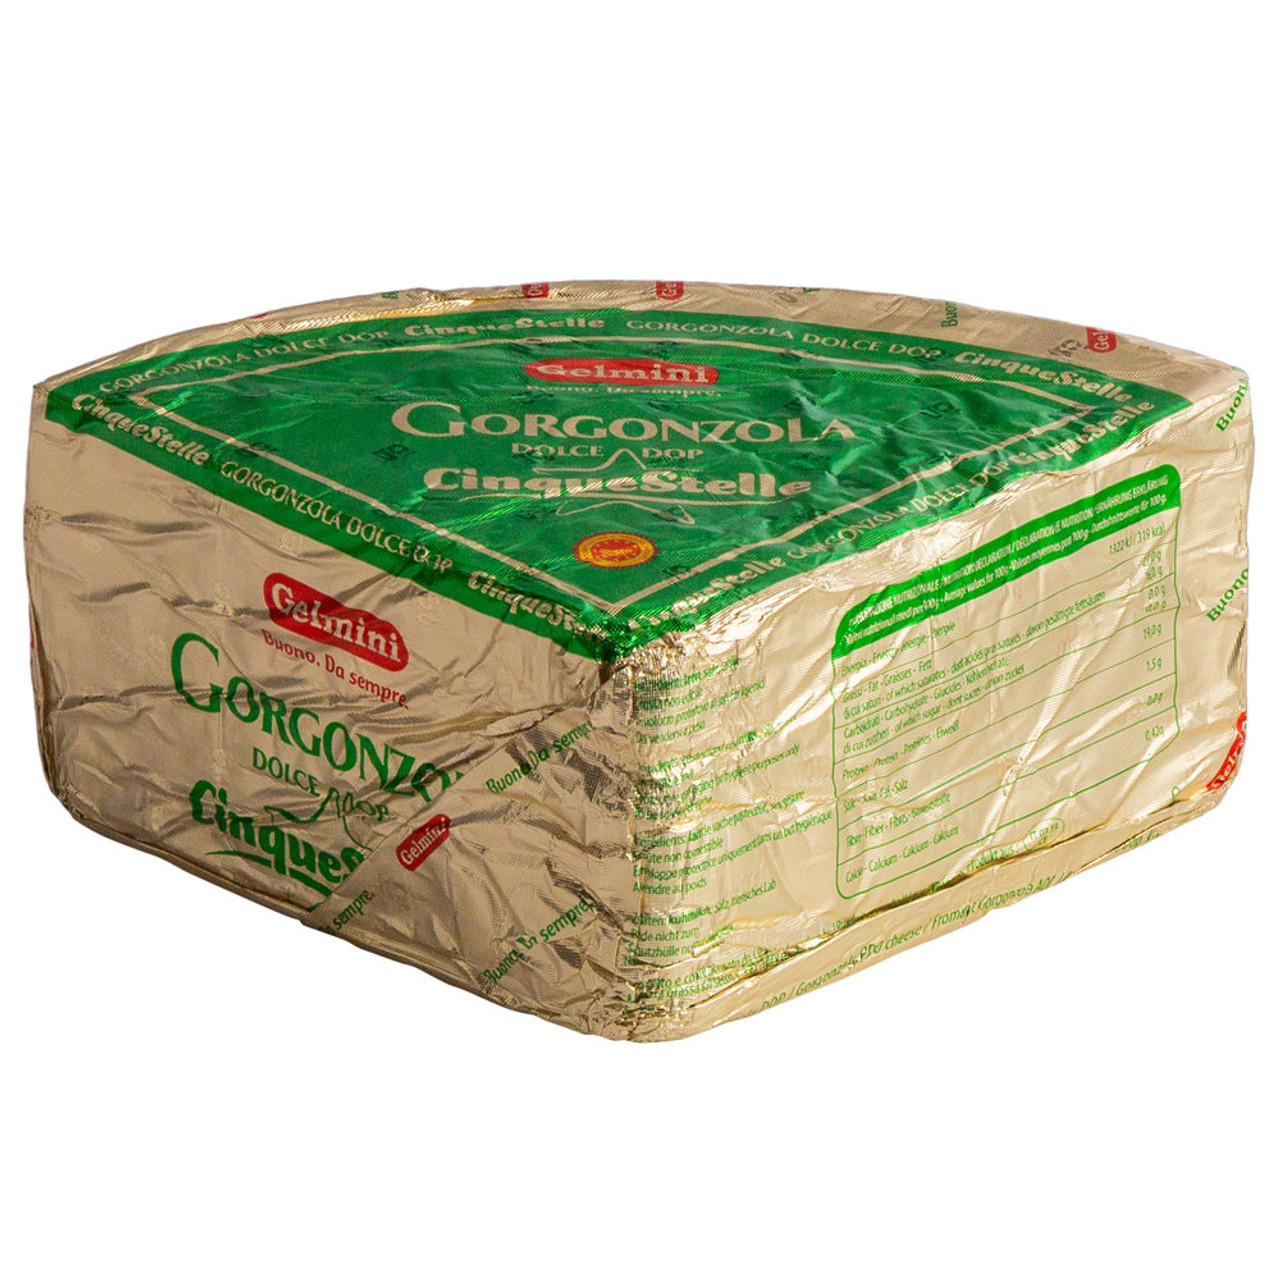 Gorgonzola Dolce at Whole Foods Market